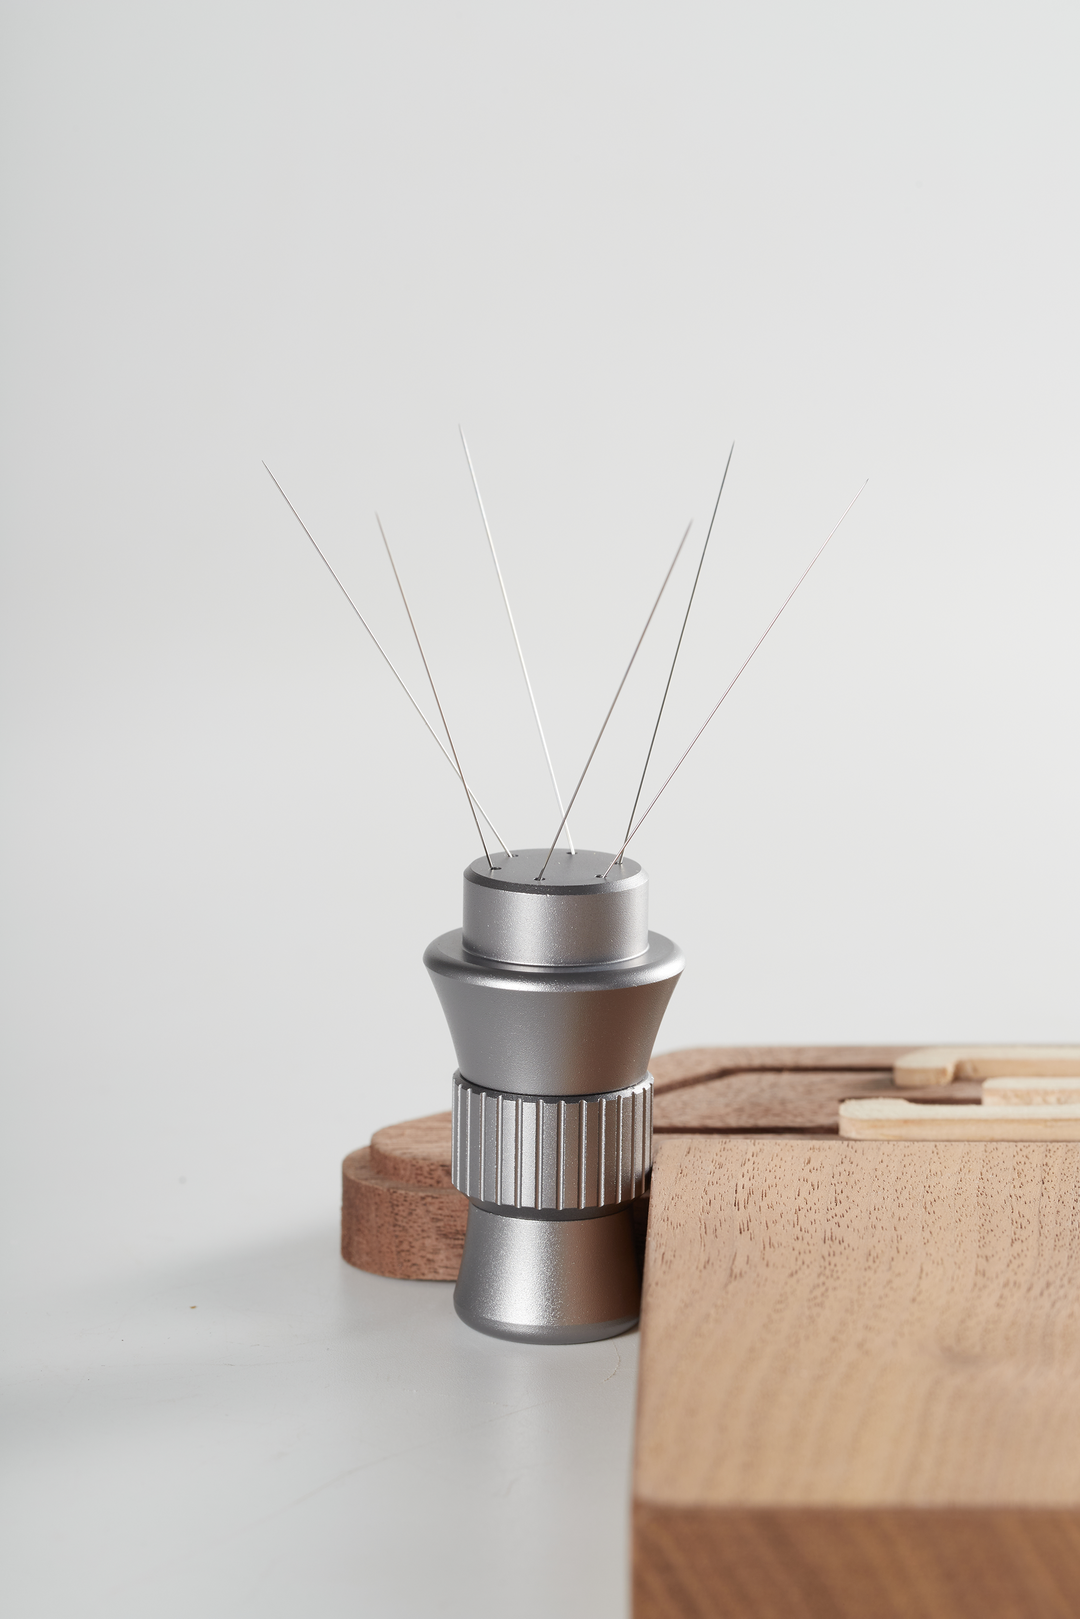 IKAPE Espresso WDT Tools, Adjustable Espresso Stirrer for Barista, Needles  Espresso Distributor Tool with Magnetic Stand